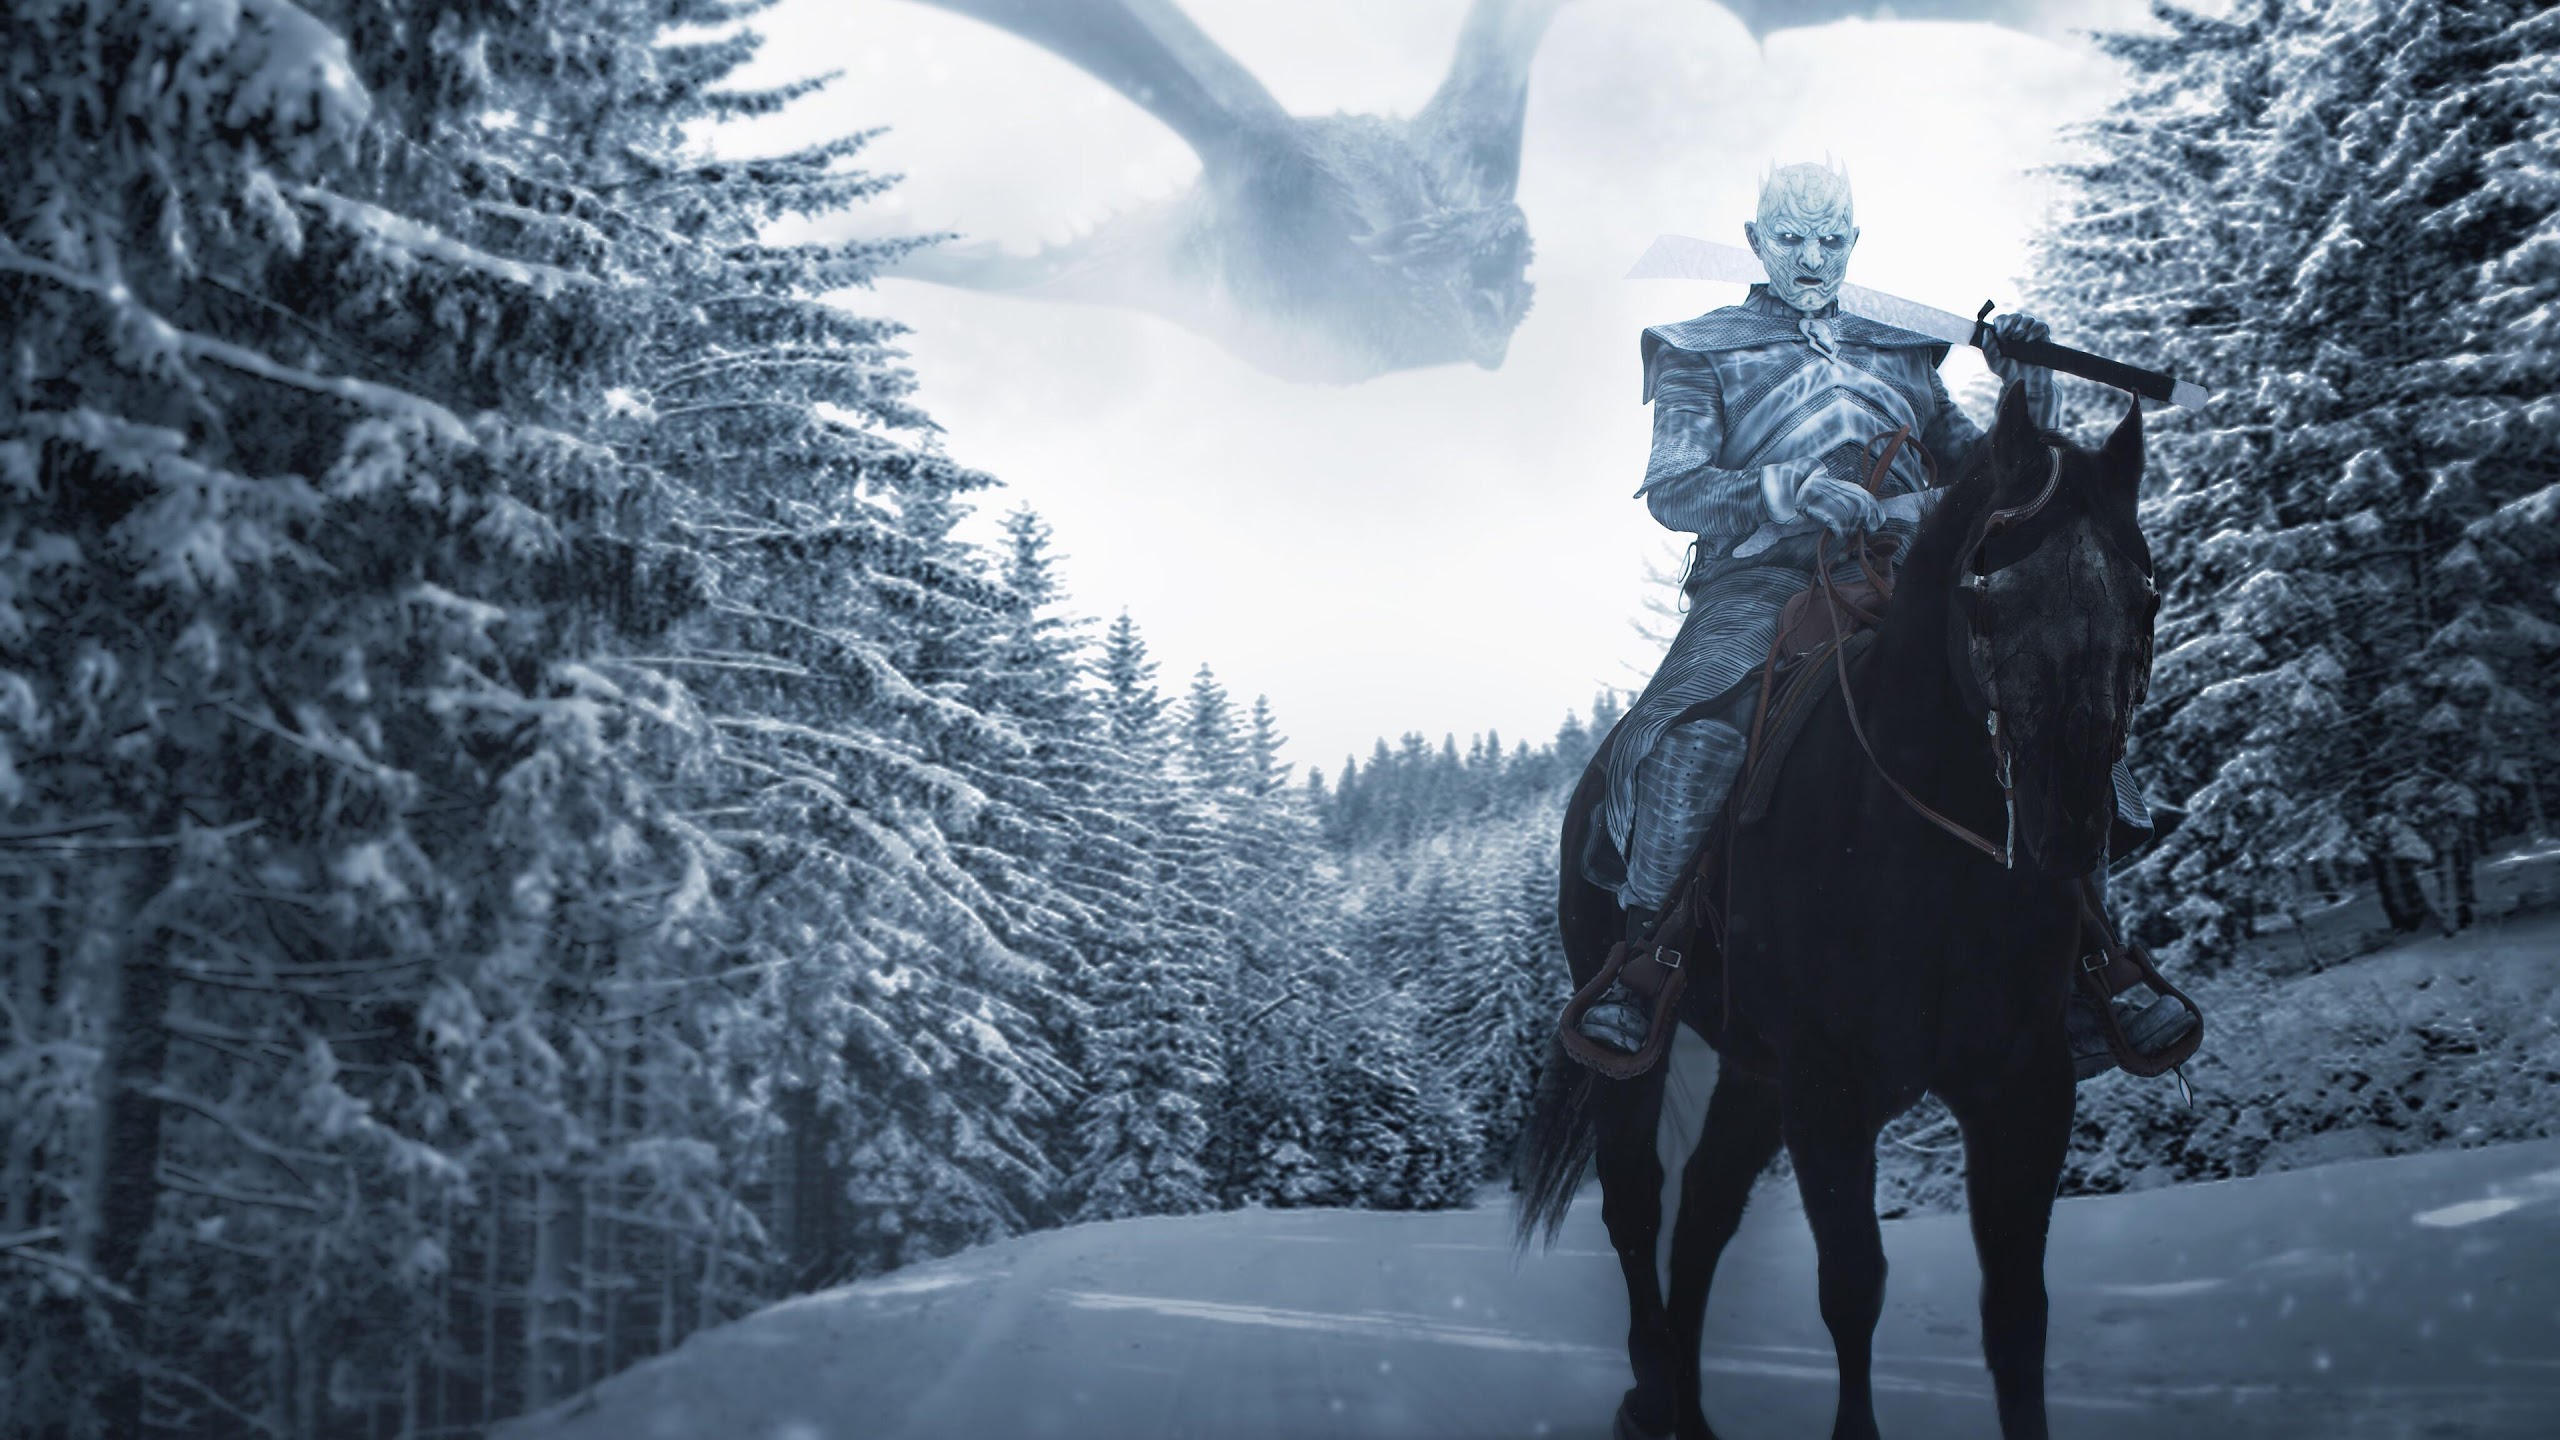 juego de tronos fondo de pantalla hd,caballo,cielo,invierno,árbol,nieve